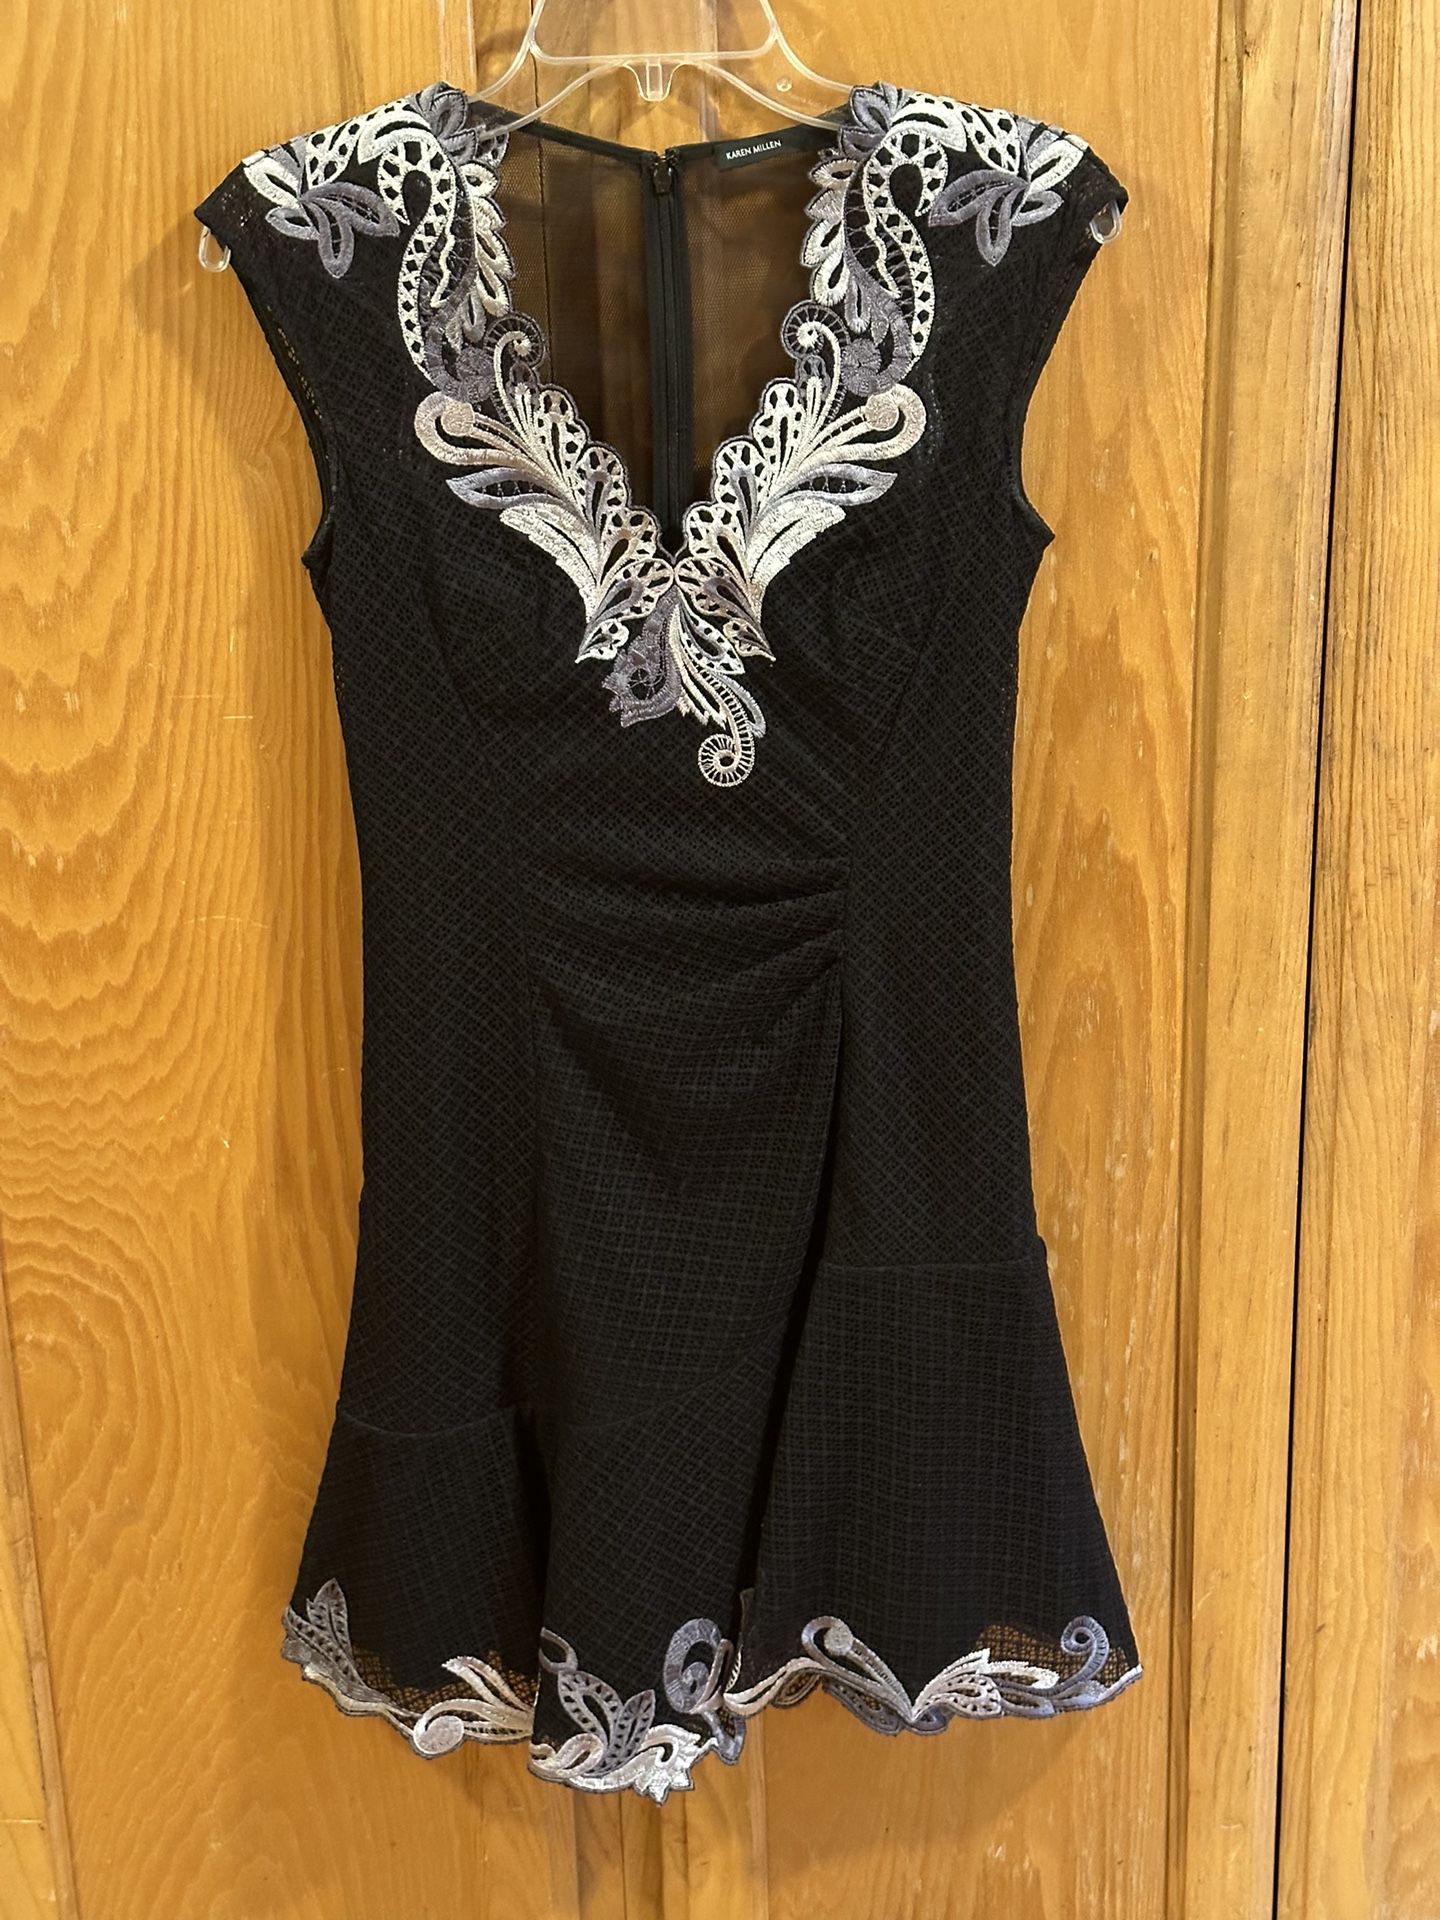 Beautiful Karen Millen Elegant Black Dress with Silver & Gray Embroidery US Size 6